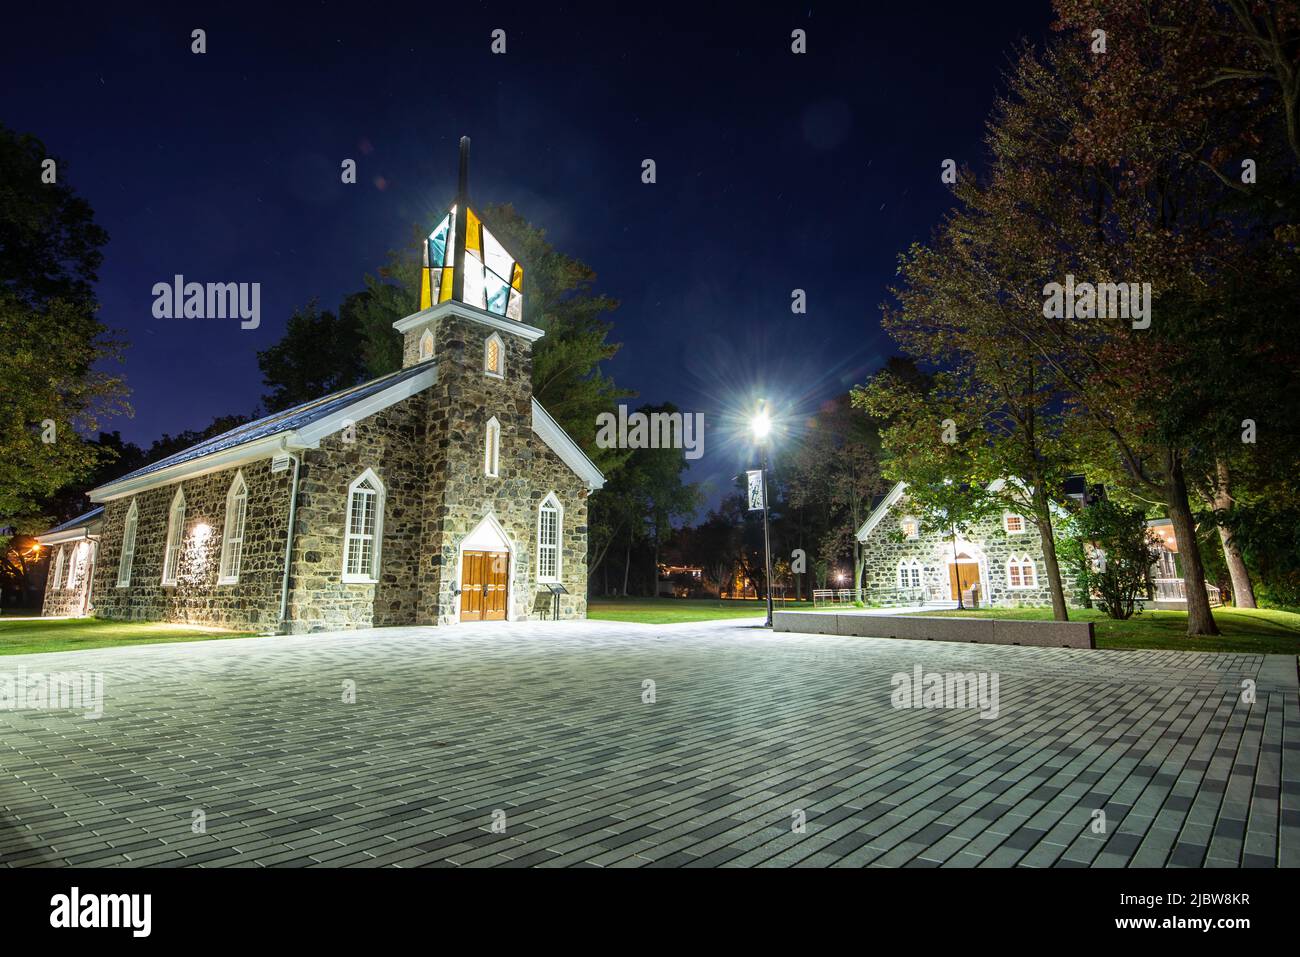 Trinity Domain, an old church renovated as a public place, Saint-Jean-sur-Richelieu, Quebec, Canada. Stock Photo